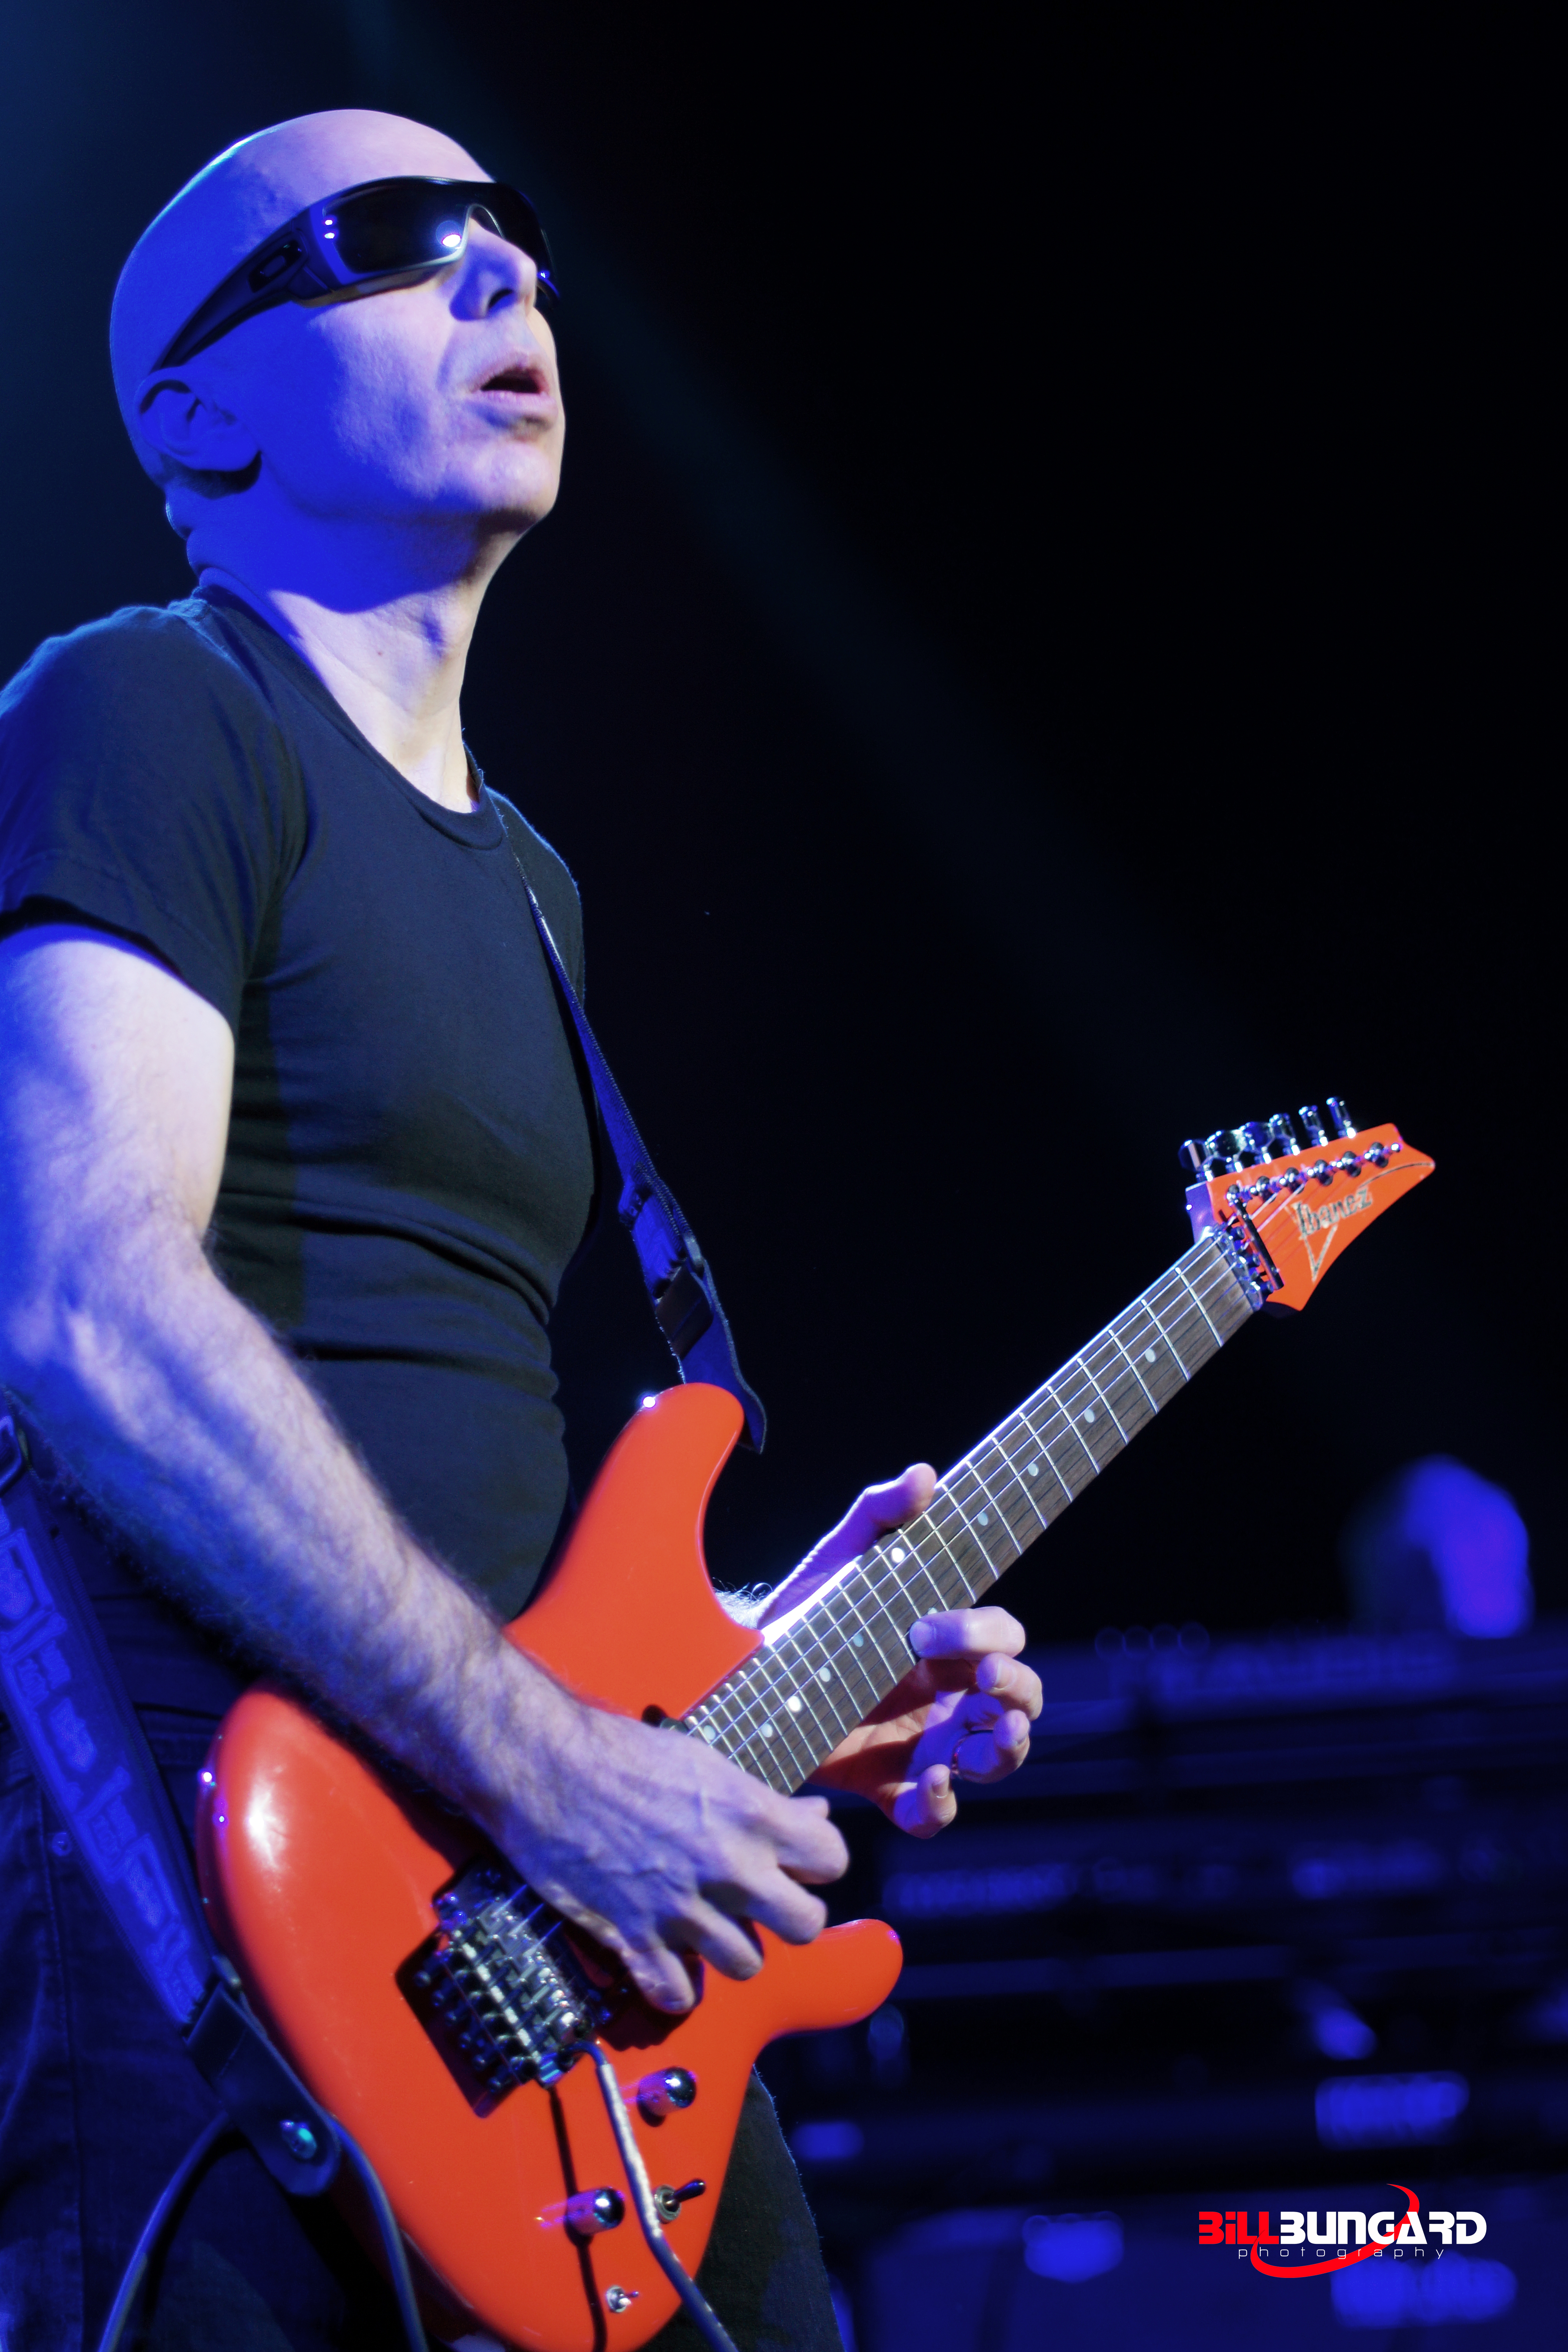 Joe Satriani @ The Paramount (Photo By Bill Bungard)